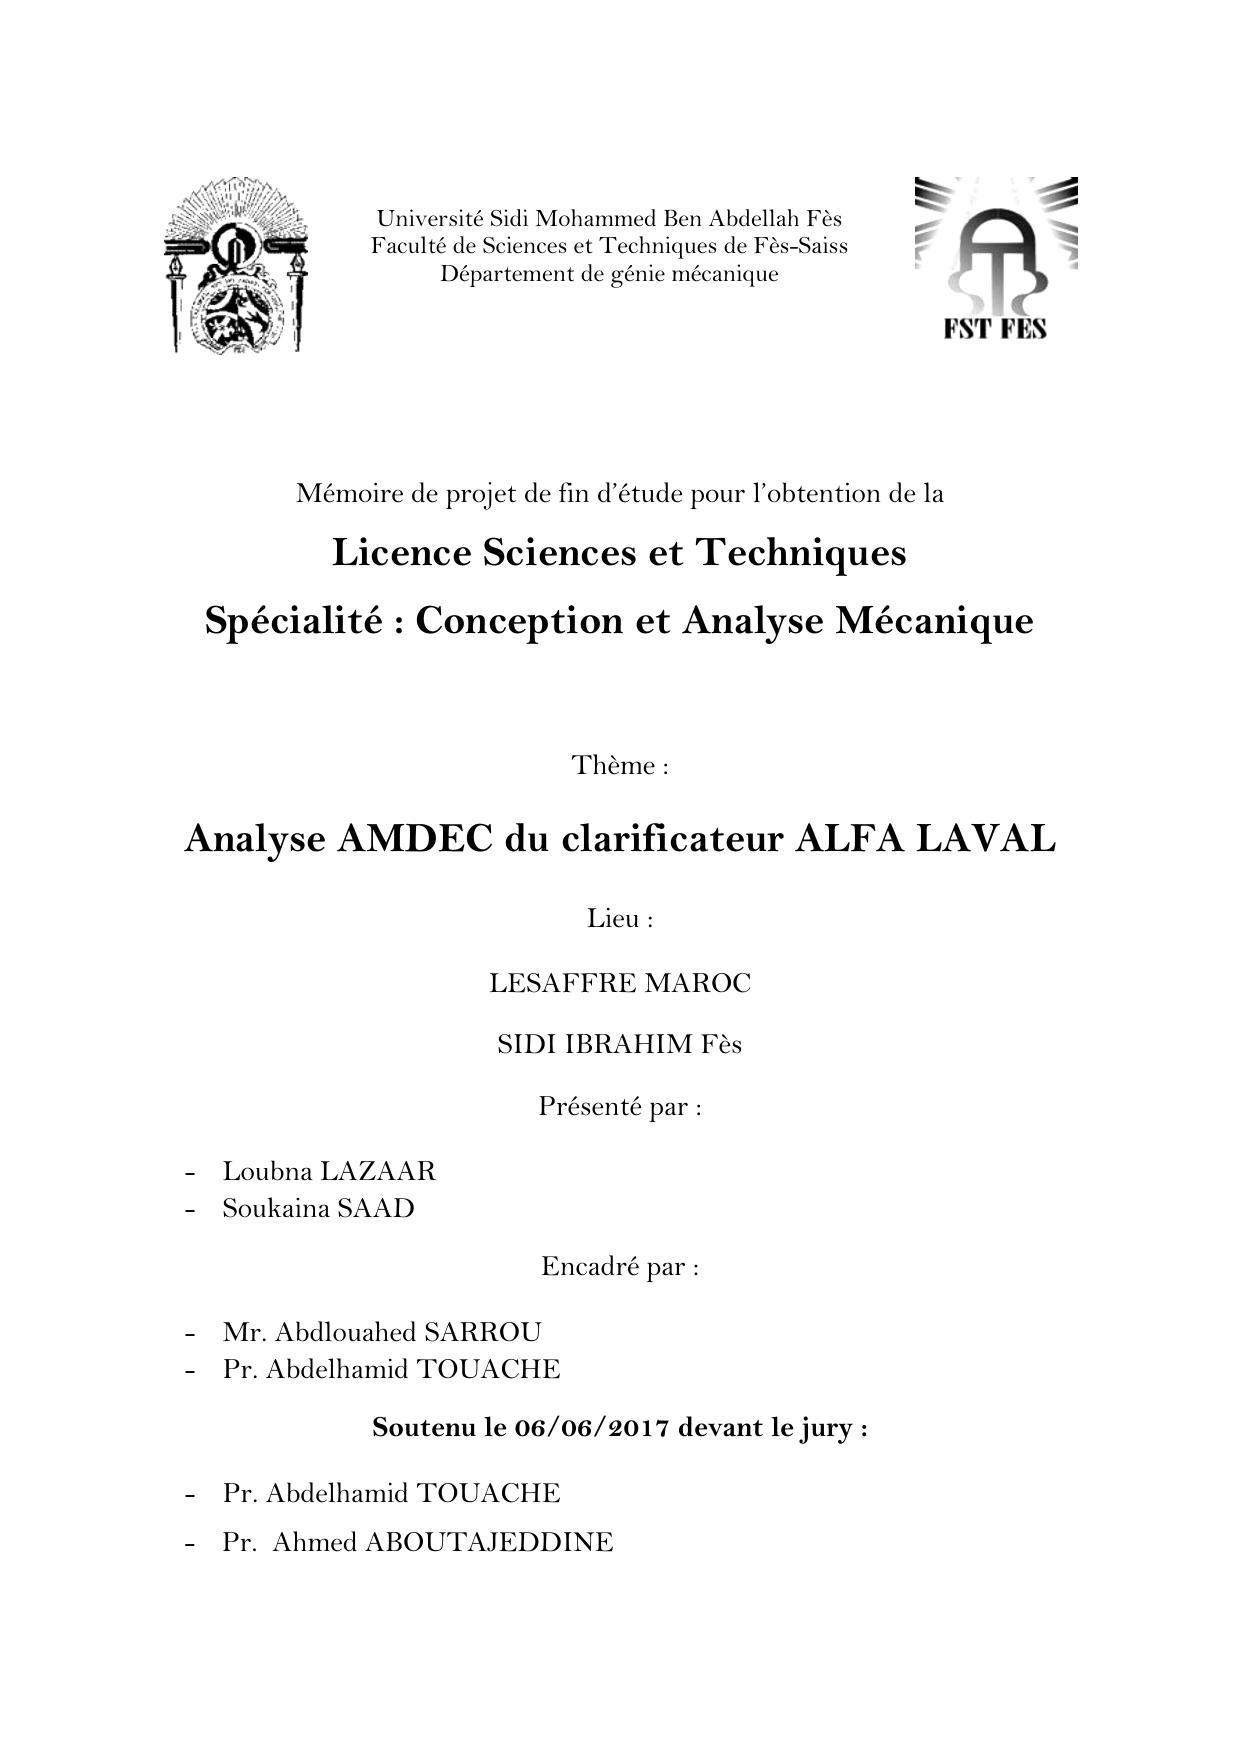 Analyse AMDEC du clarificateur ALFA LAVAL